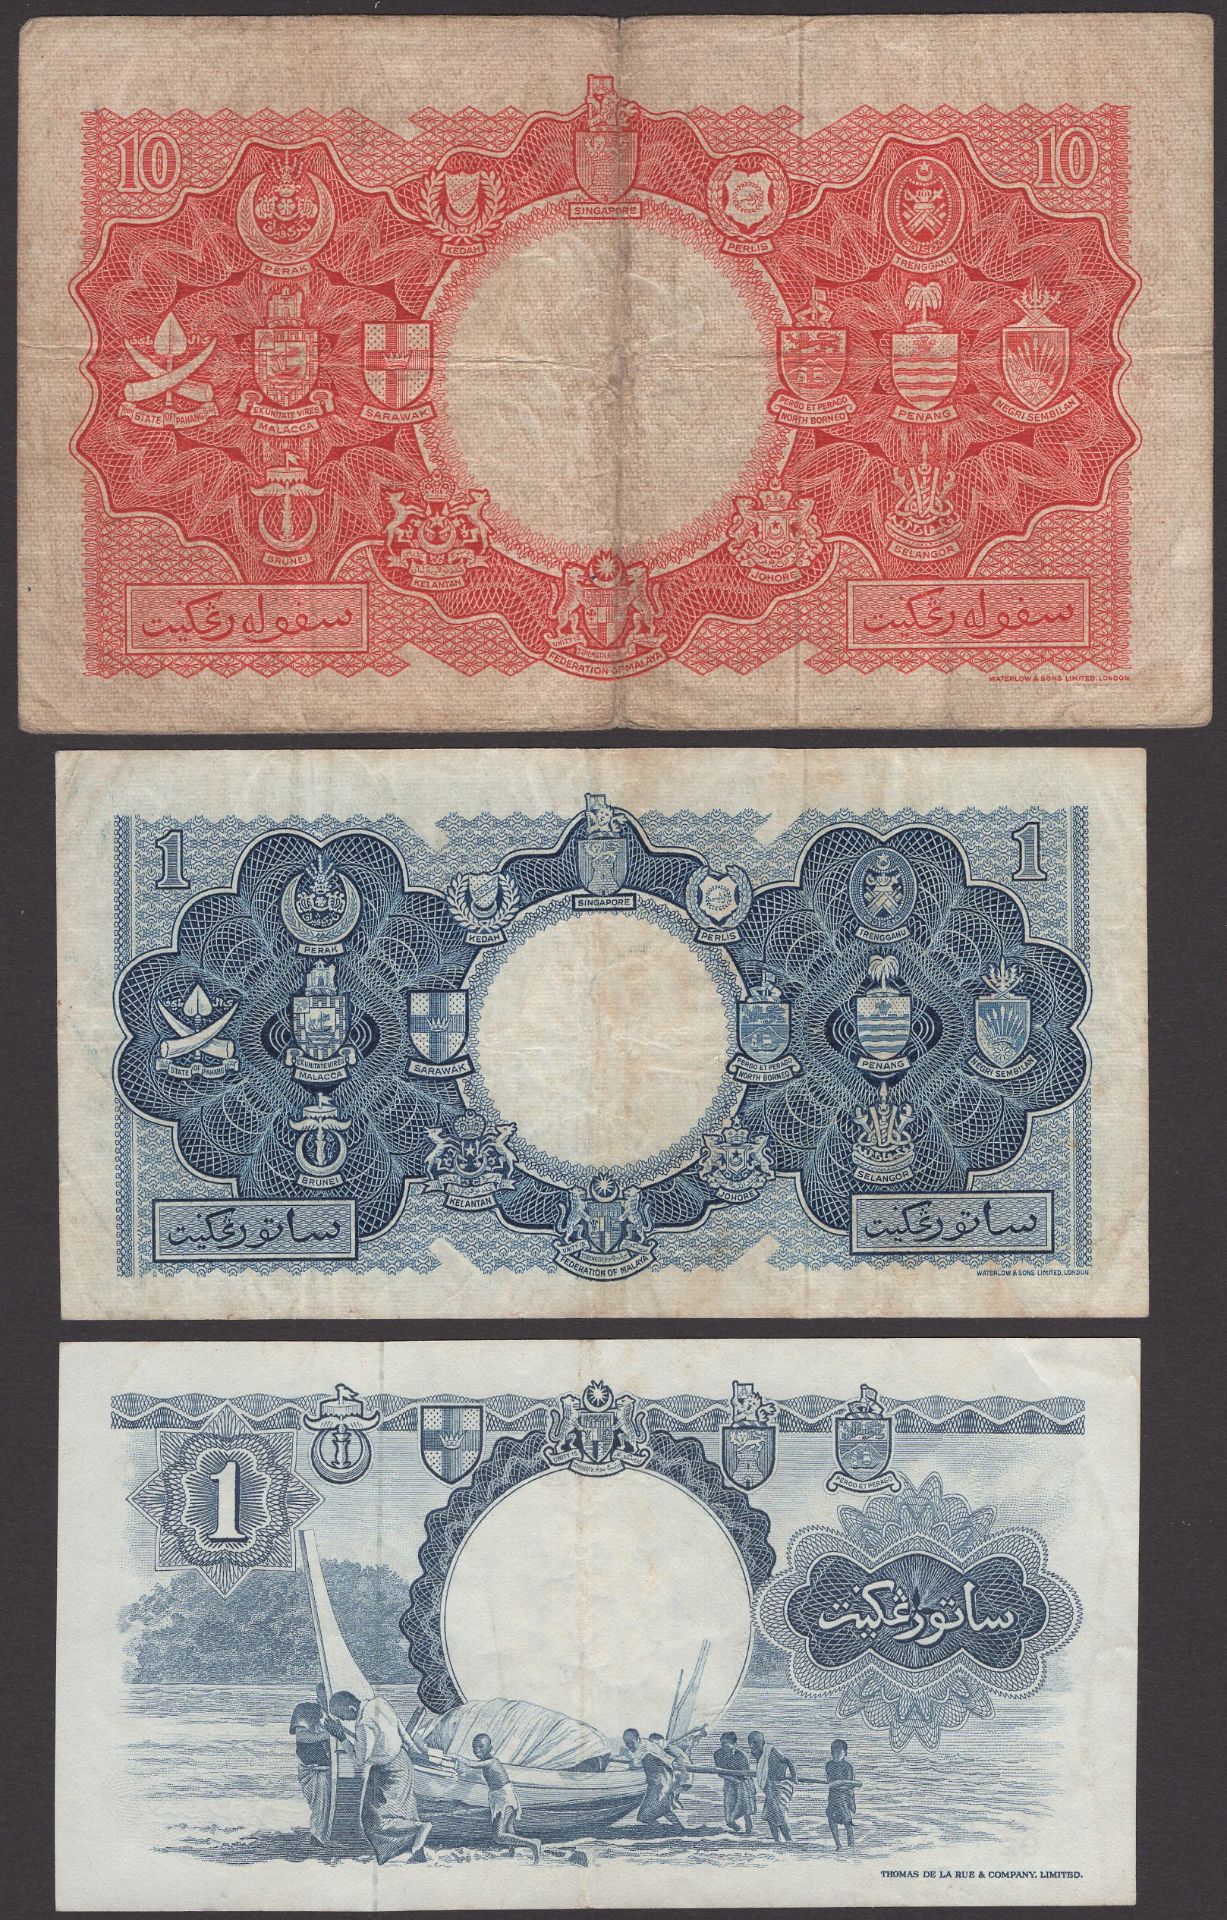 World Banknotes - Image 2 of 2